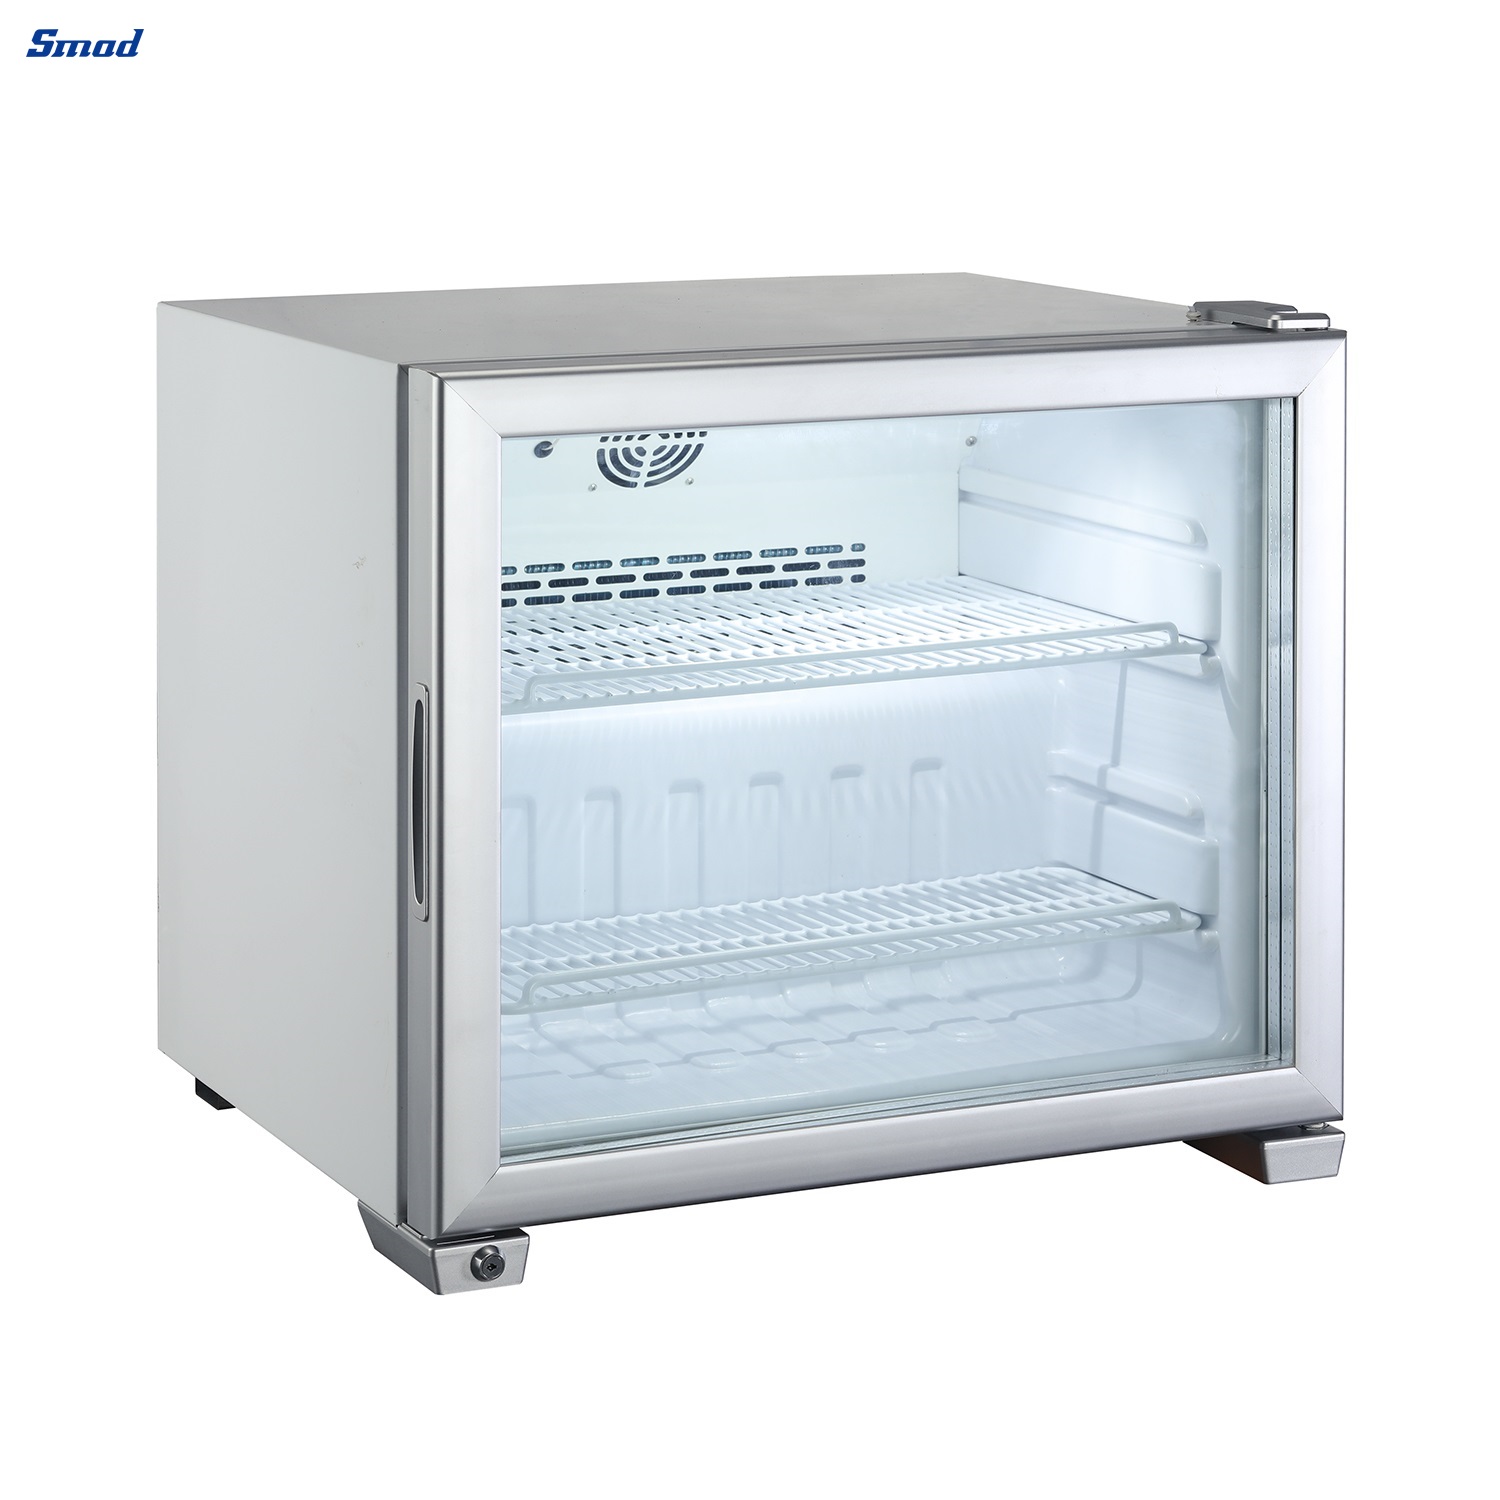 Smad 49L Single Glass Door Countertop Ice Cream Display Freezer with internal LED Lighting